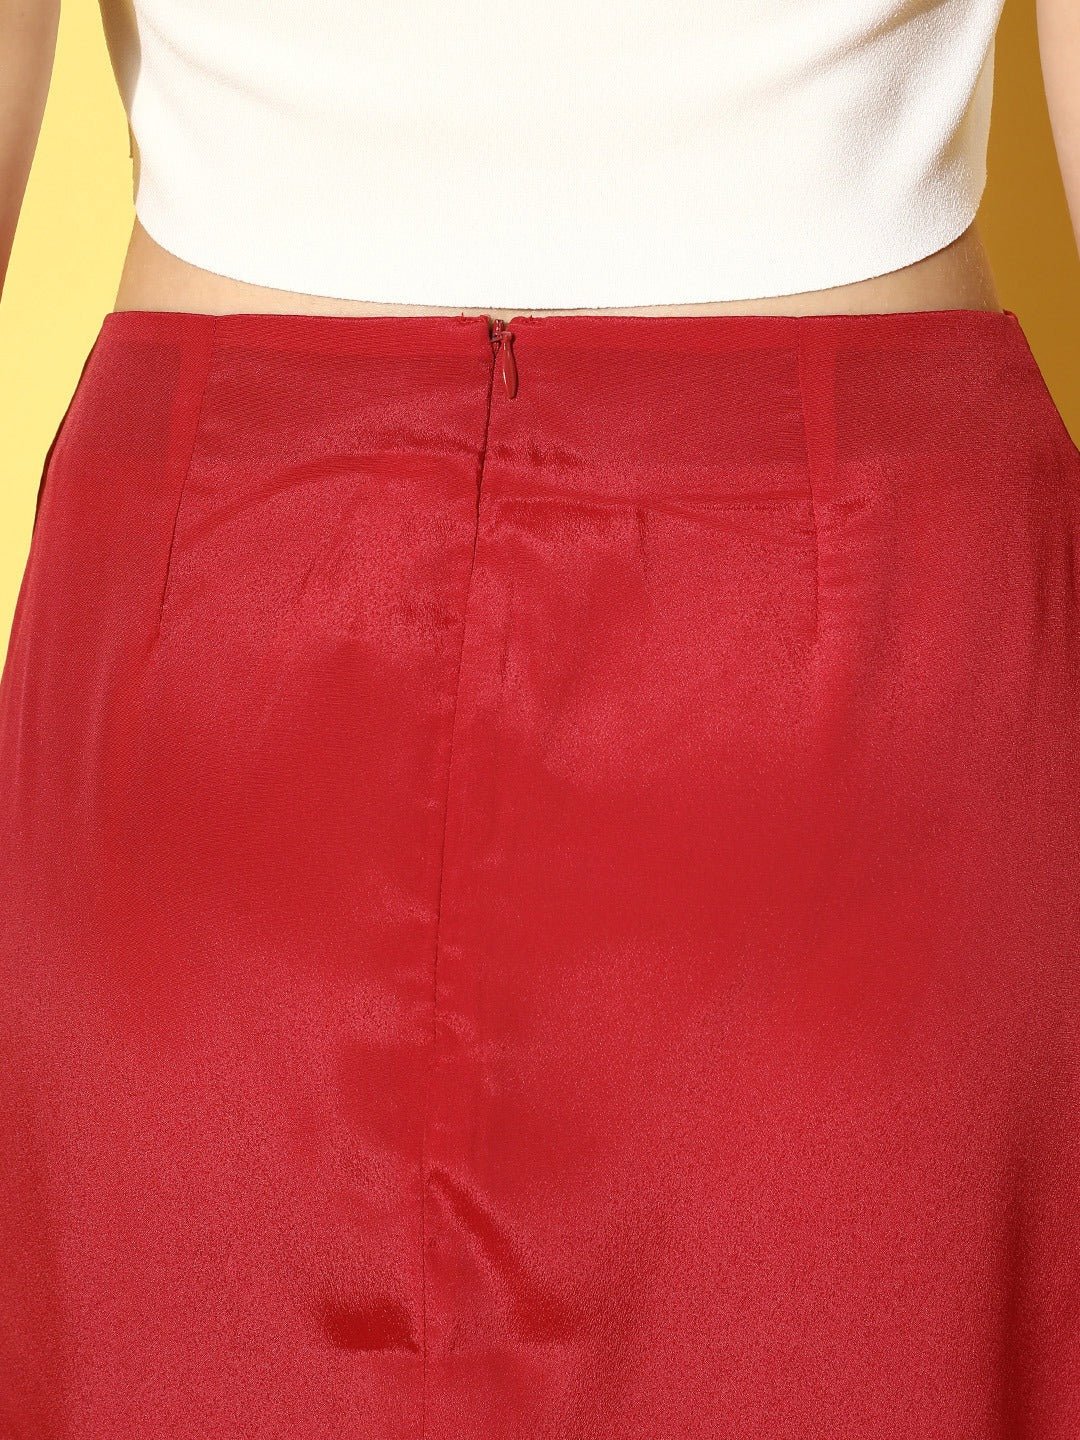 Folk Republic Women Solid Red Satin Finish Front Slit Straight Hem A-Line Mini Skirt - #folk republic#